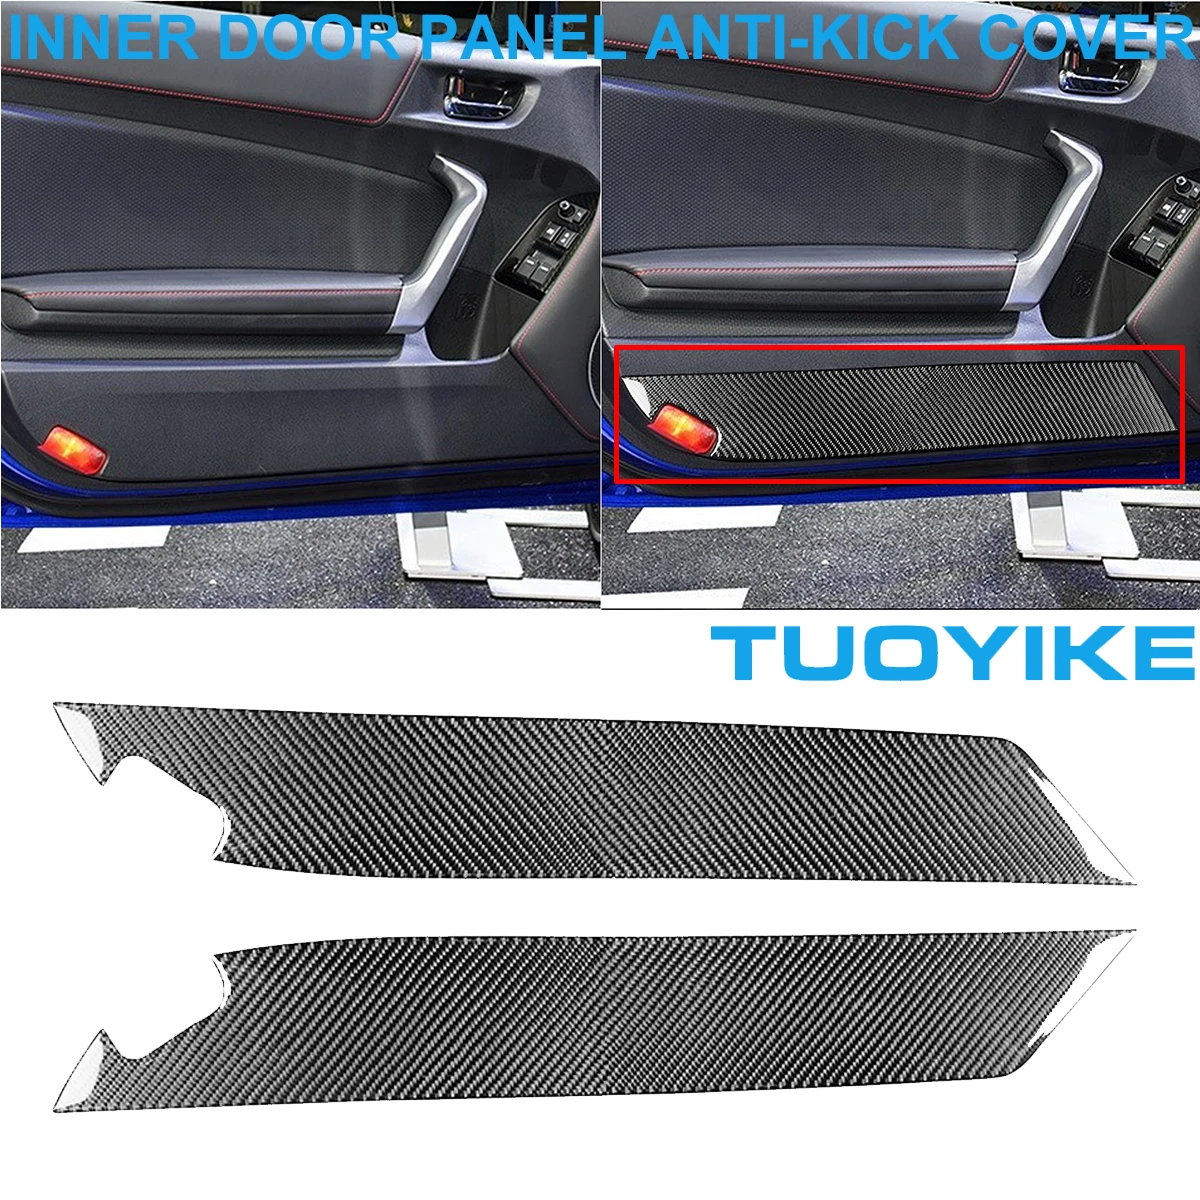 

LHD RHD Car Styling Carbon Fiber Interior Inner Door Panel Anti-kick Cover Trim Sticker For Toyota GT86 Subaru BRZ 2017-2019